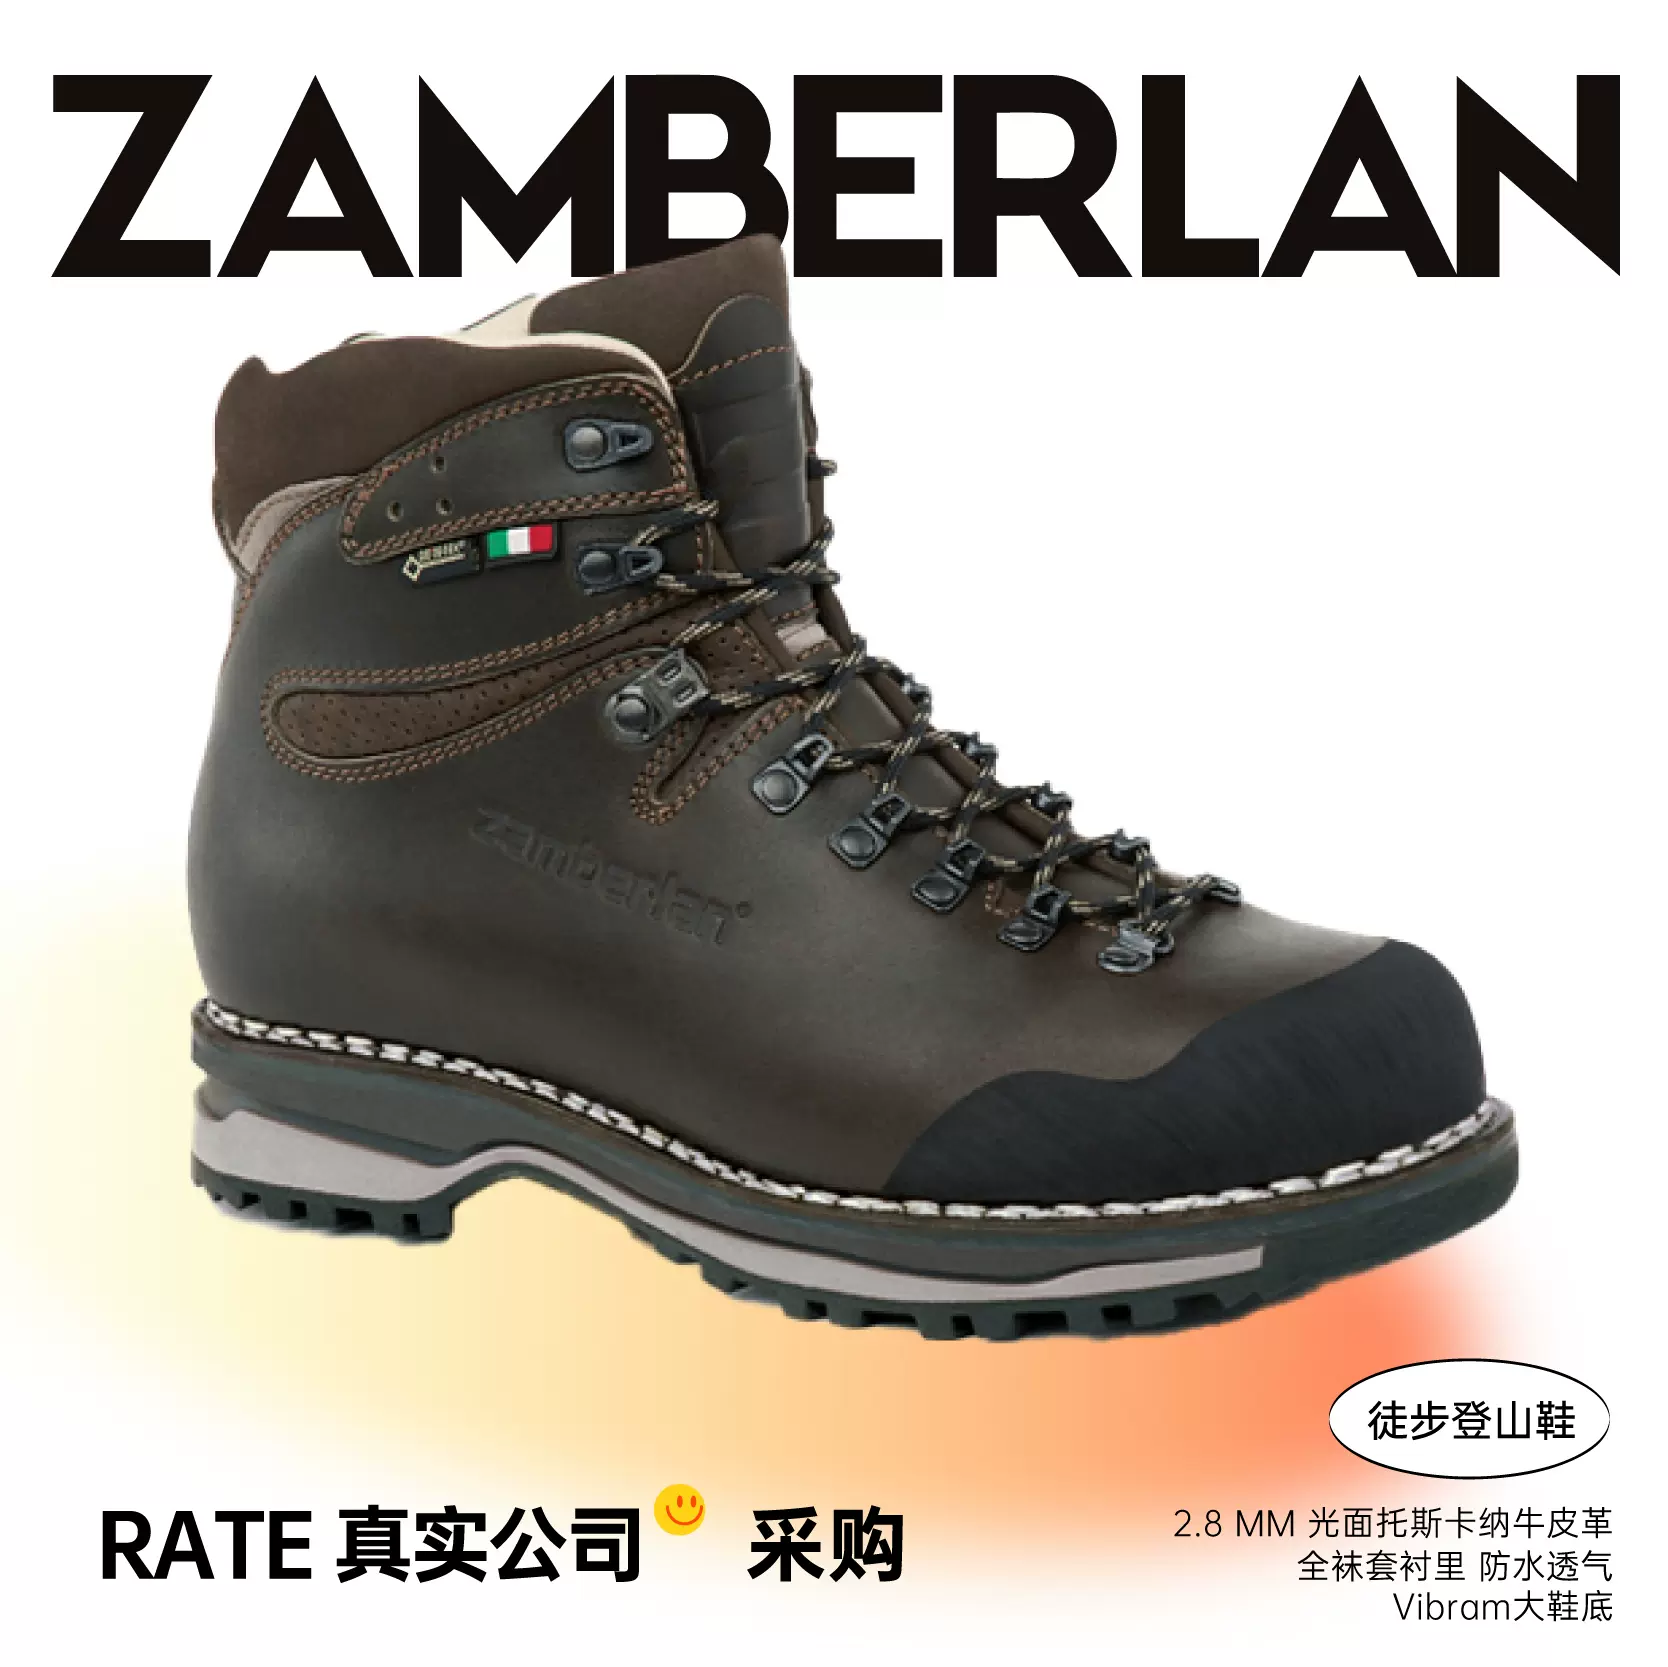 RATE代购赞贝拉Zamberlan NW GTX整皮户外徒步登山鞋防水棕黑-Taobao